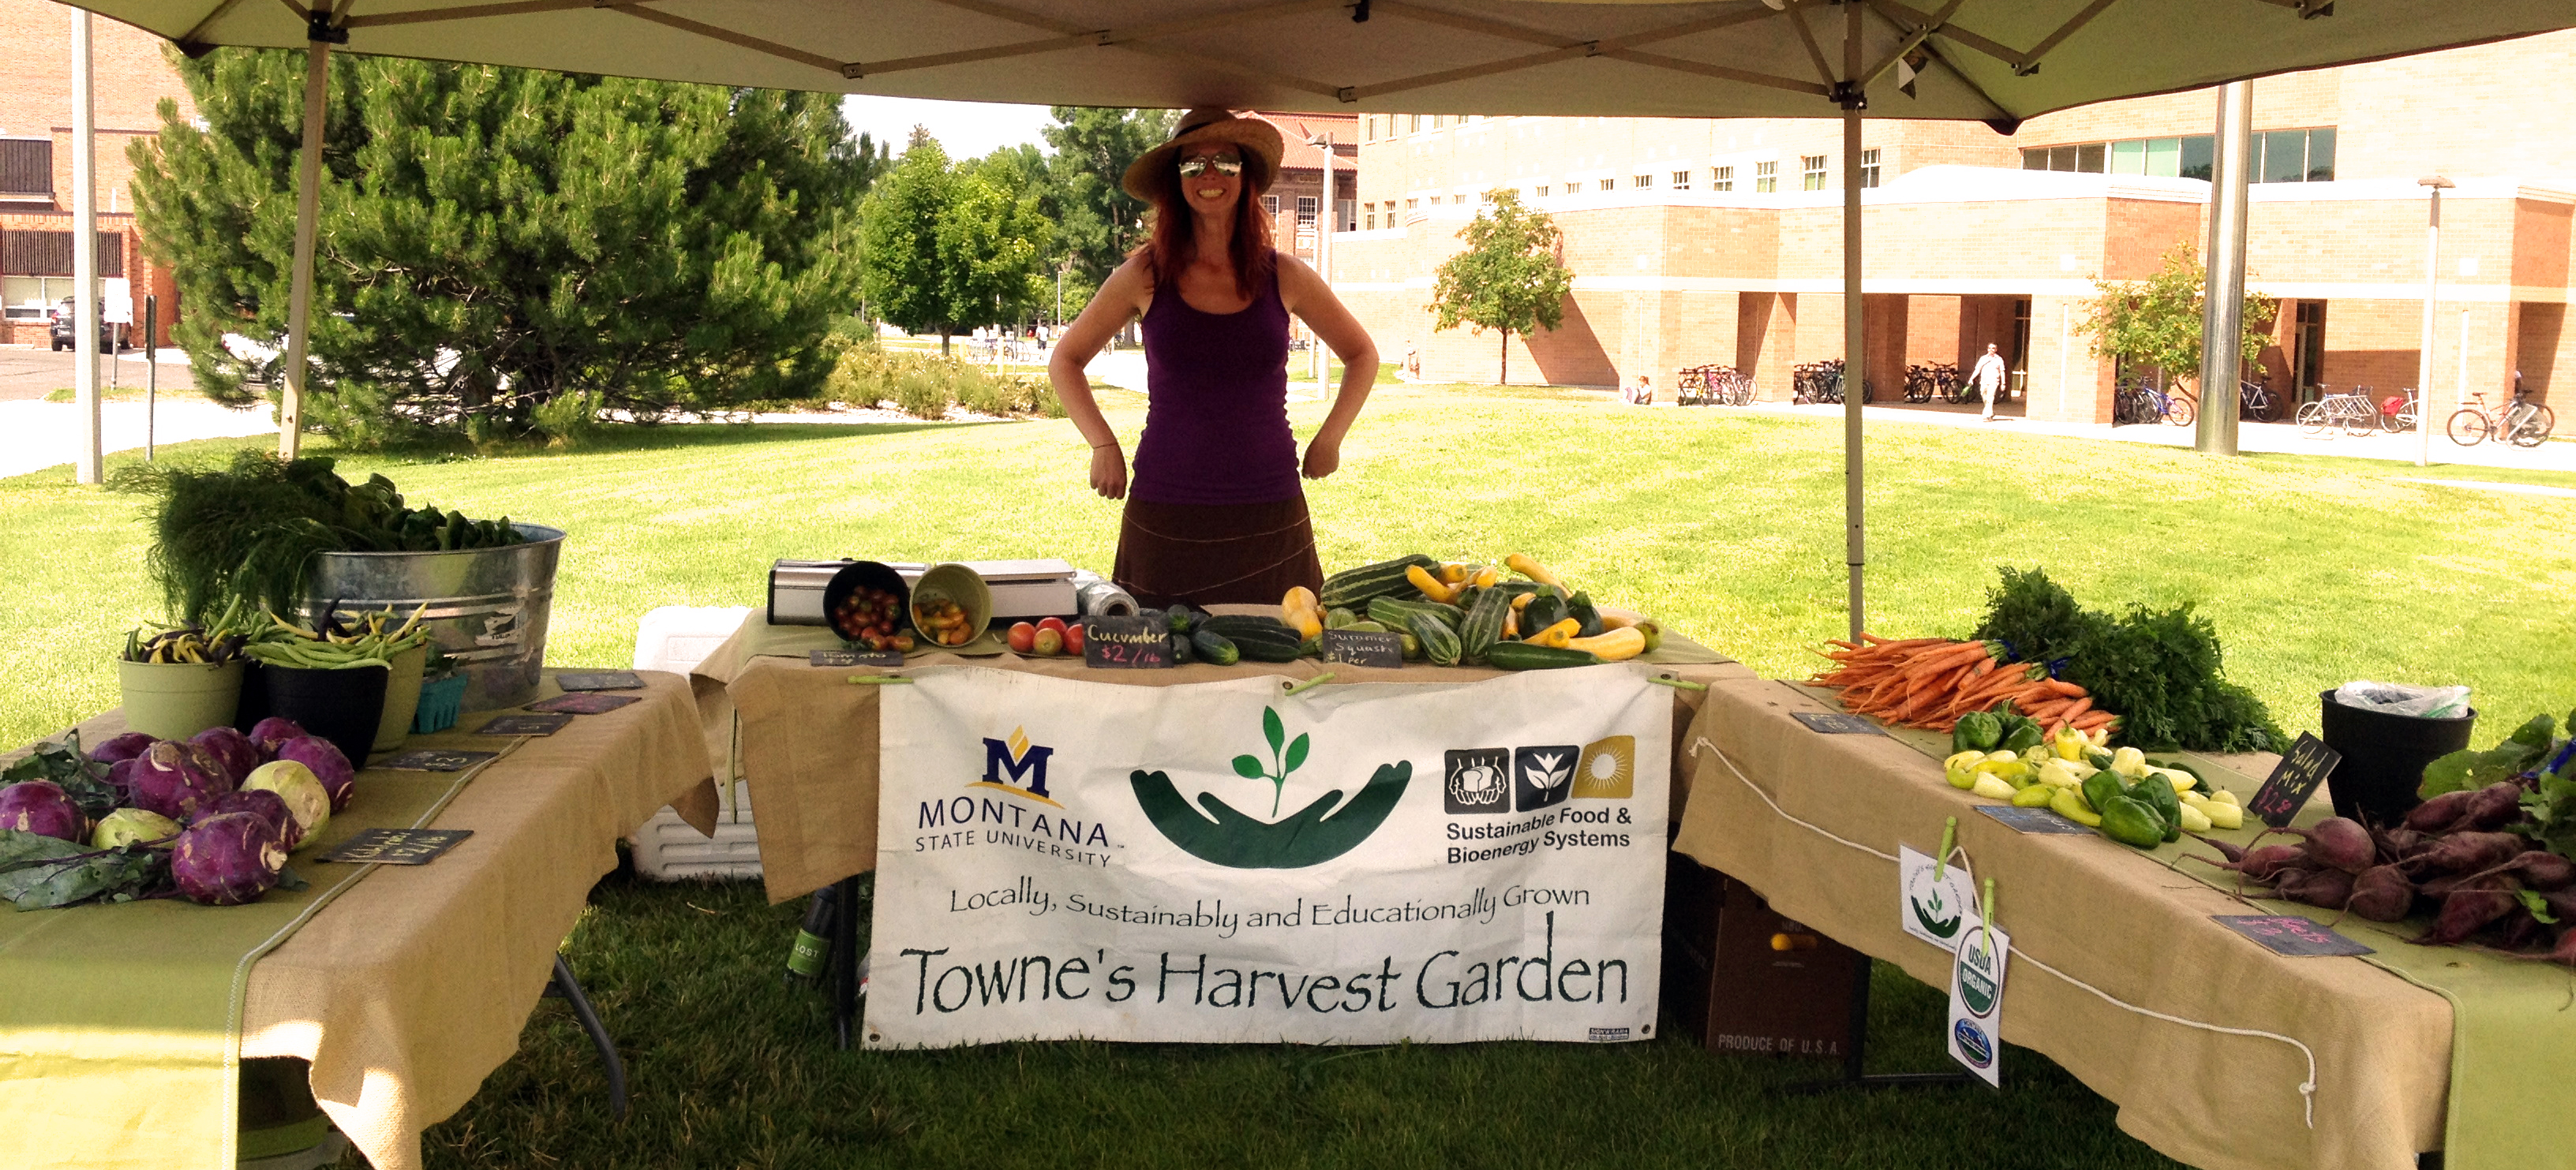 Towne's Harvest Garden creates an on-campus farmstand